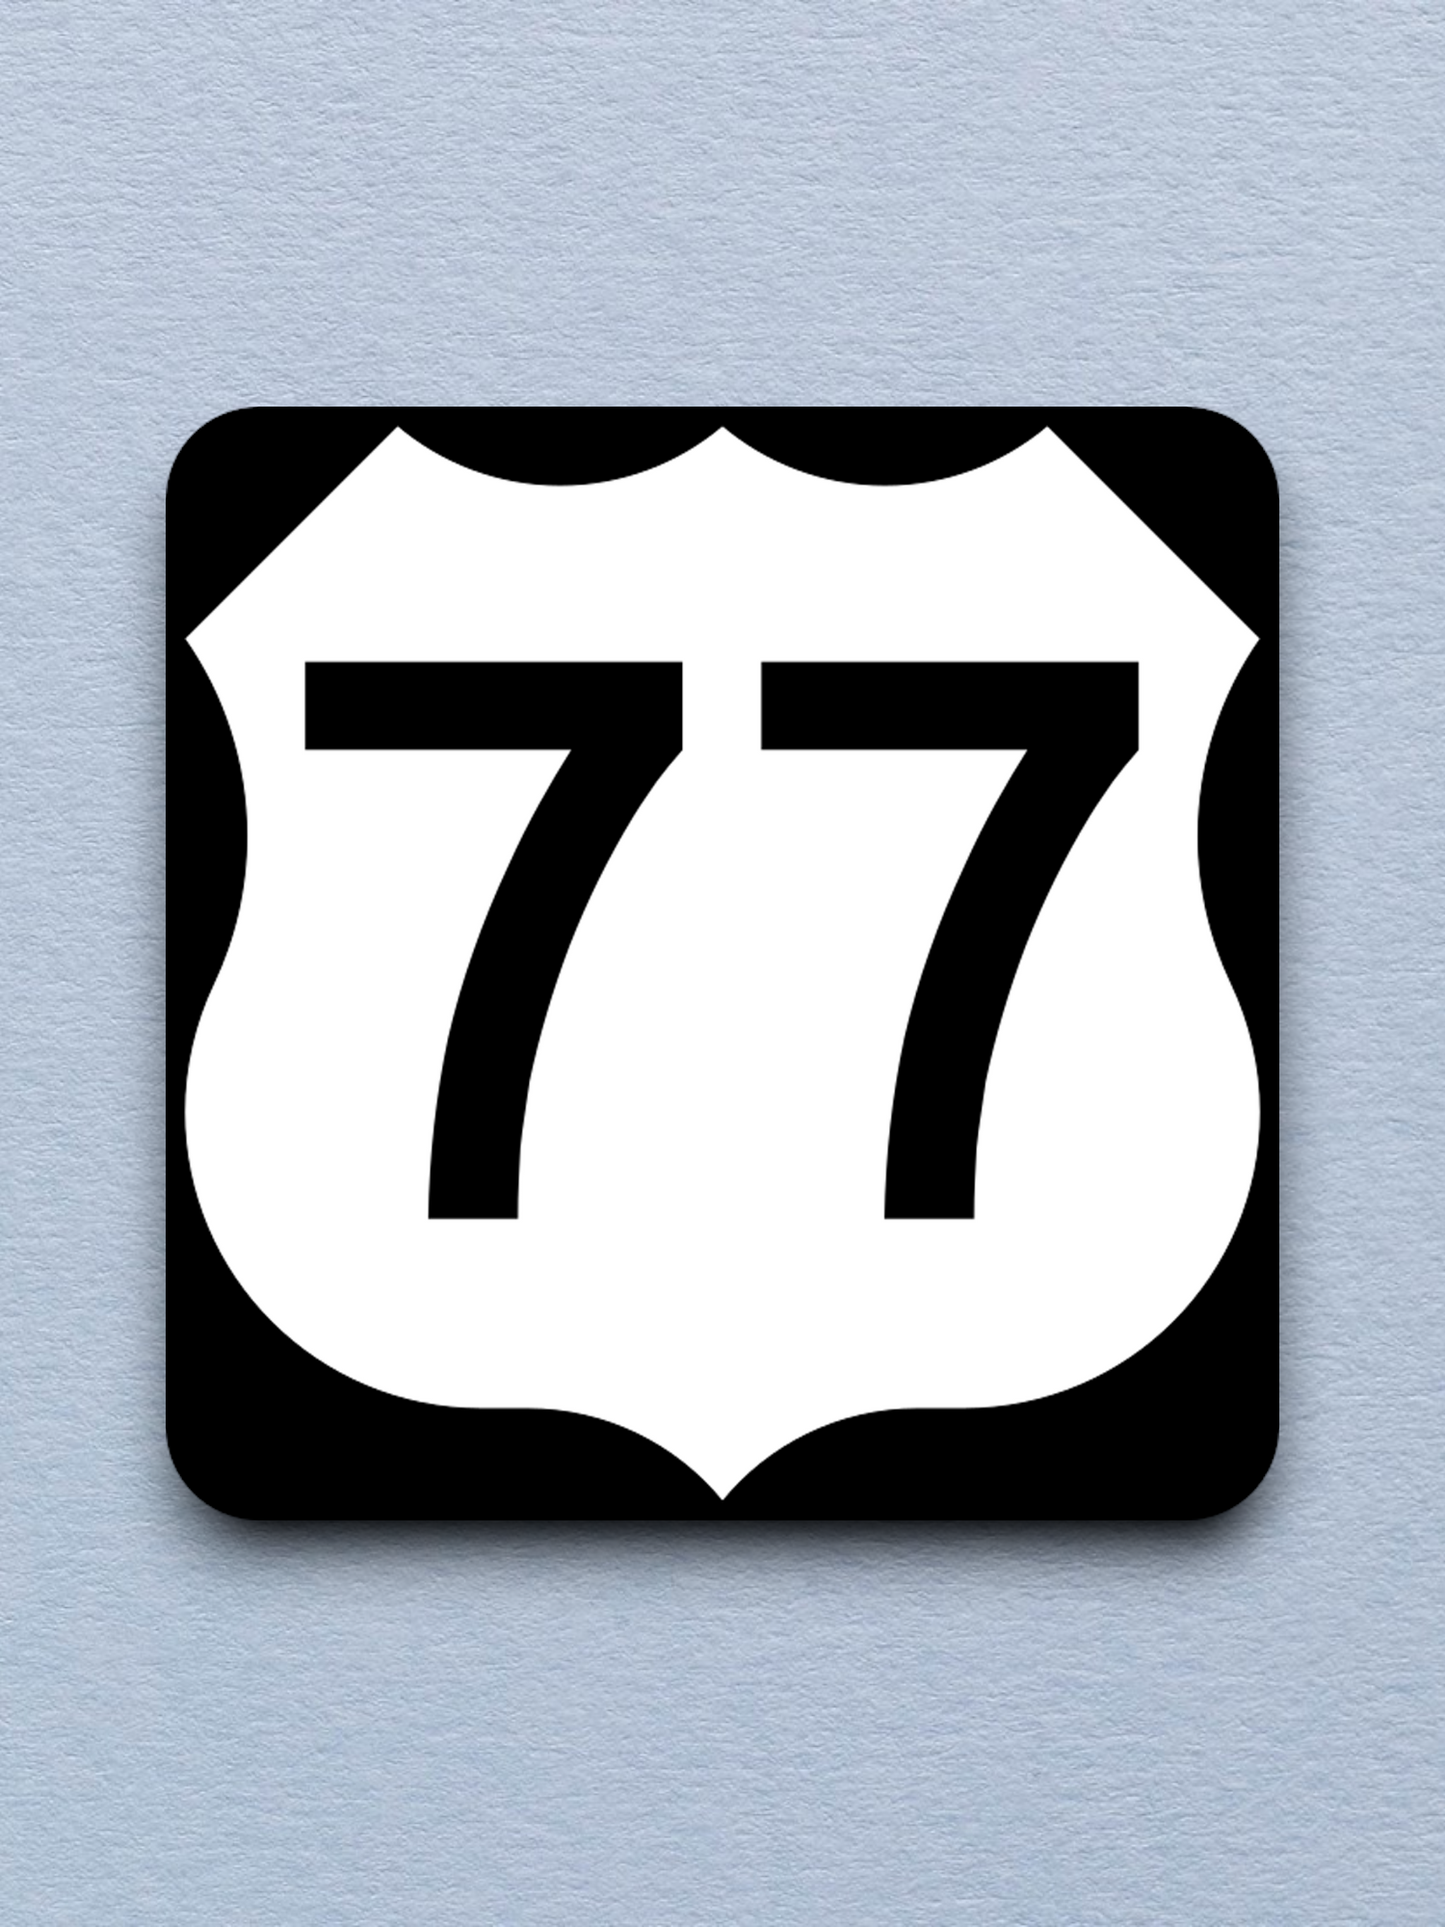 U.S. Route 77 Road Sign Sticker